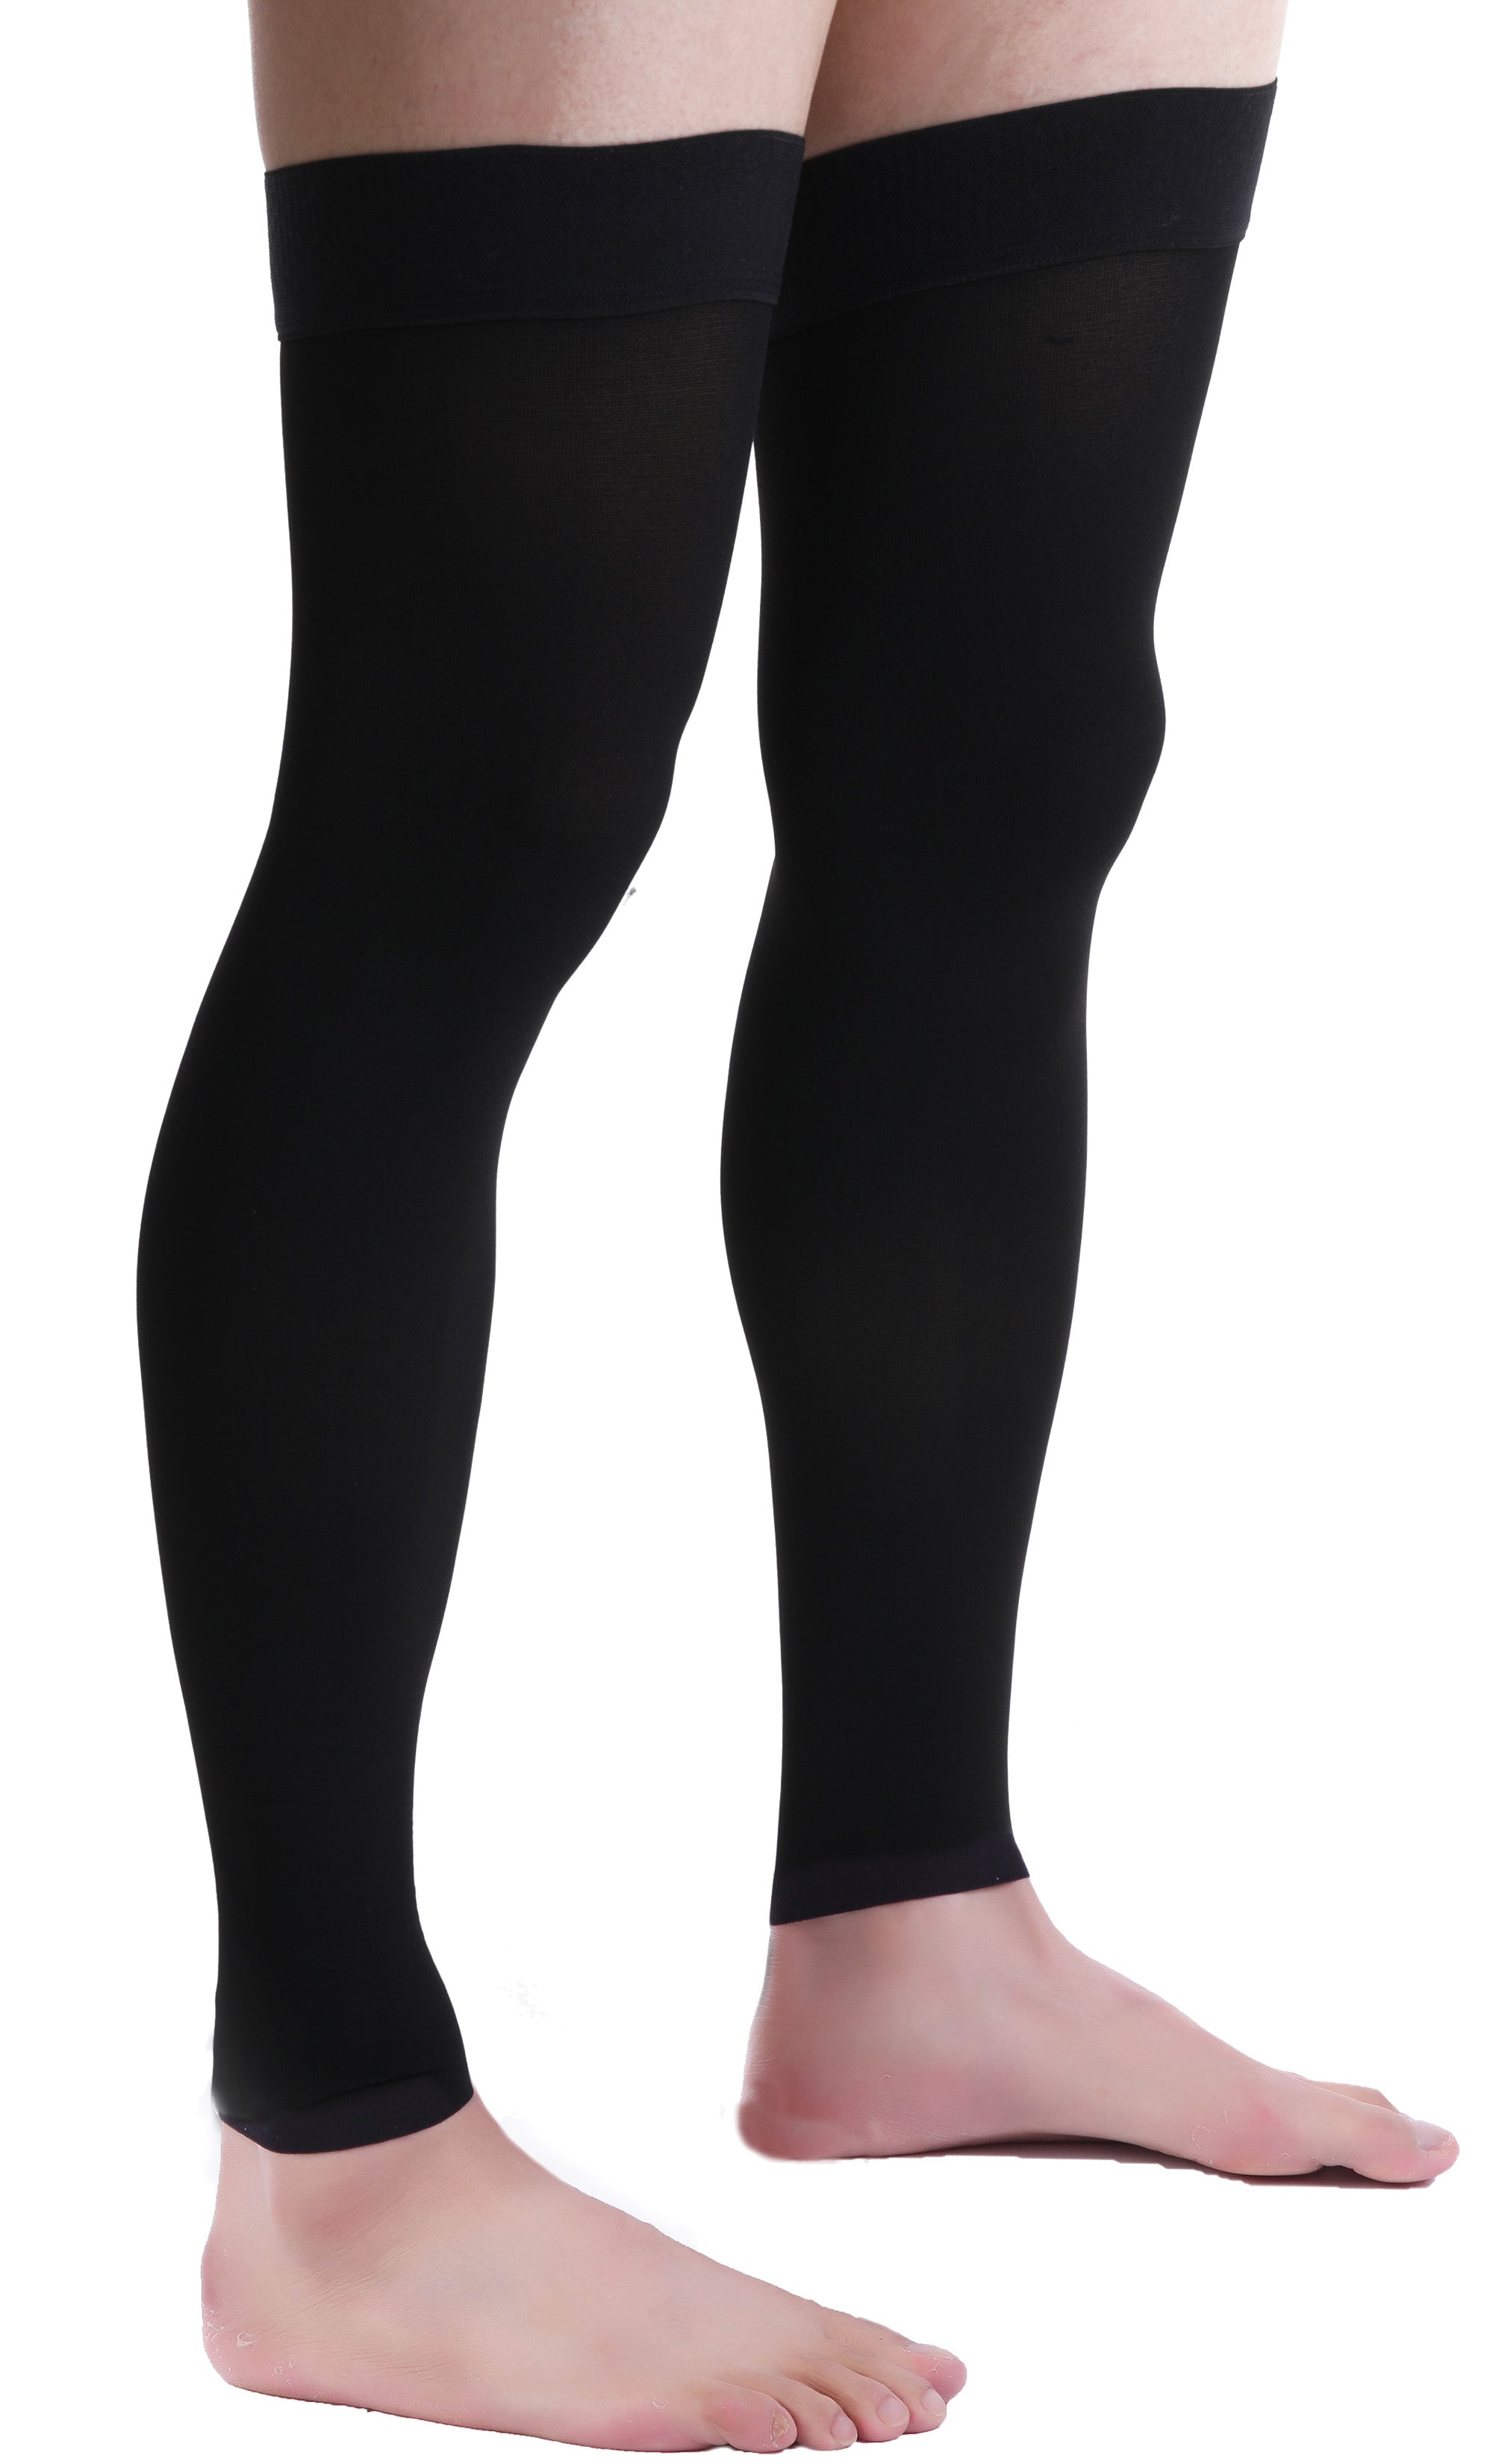 Doc Miller Compression Socks for Women and Men, 20-30mmHg Compression Socks  Men for Varicose Veins and Improved Circulation, 1 Pair Medium Size  Skin/Nude Graduated Compression Socks Medium Skin/Nude